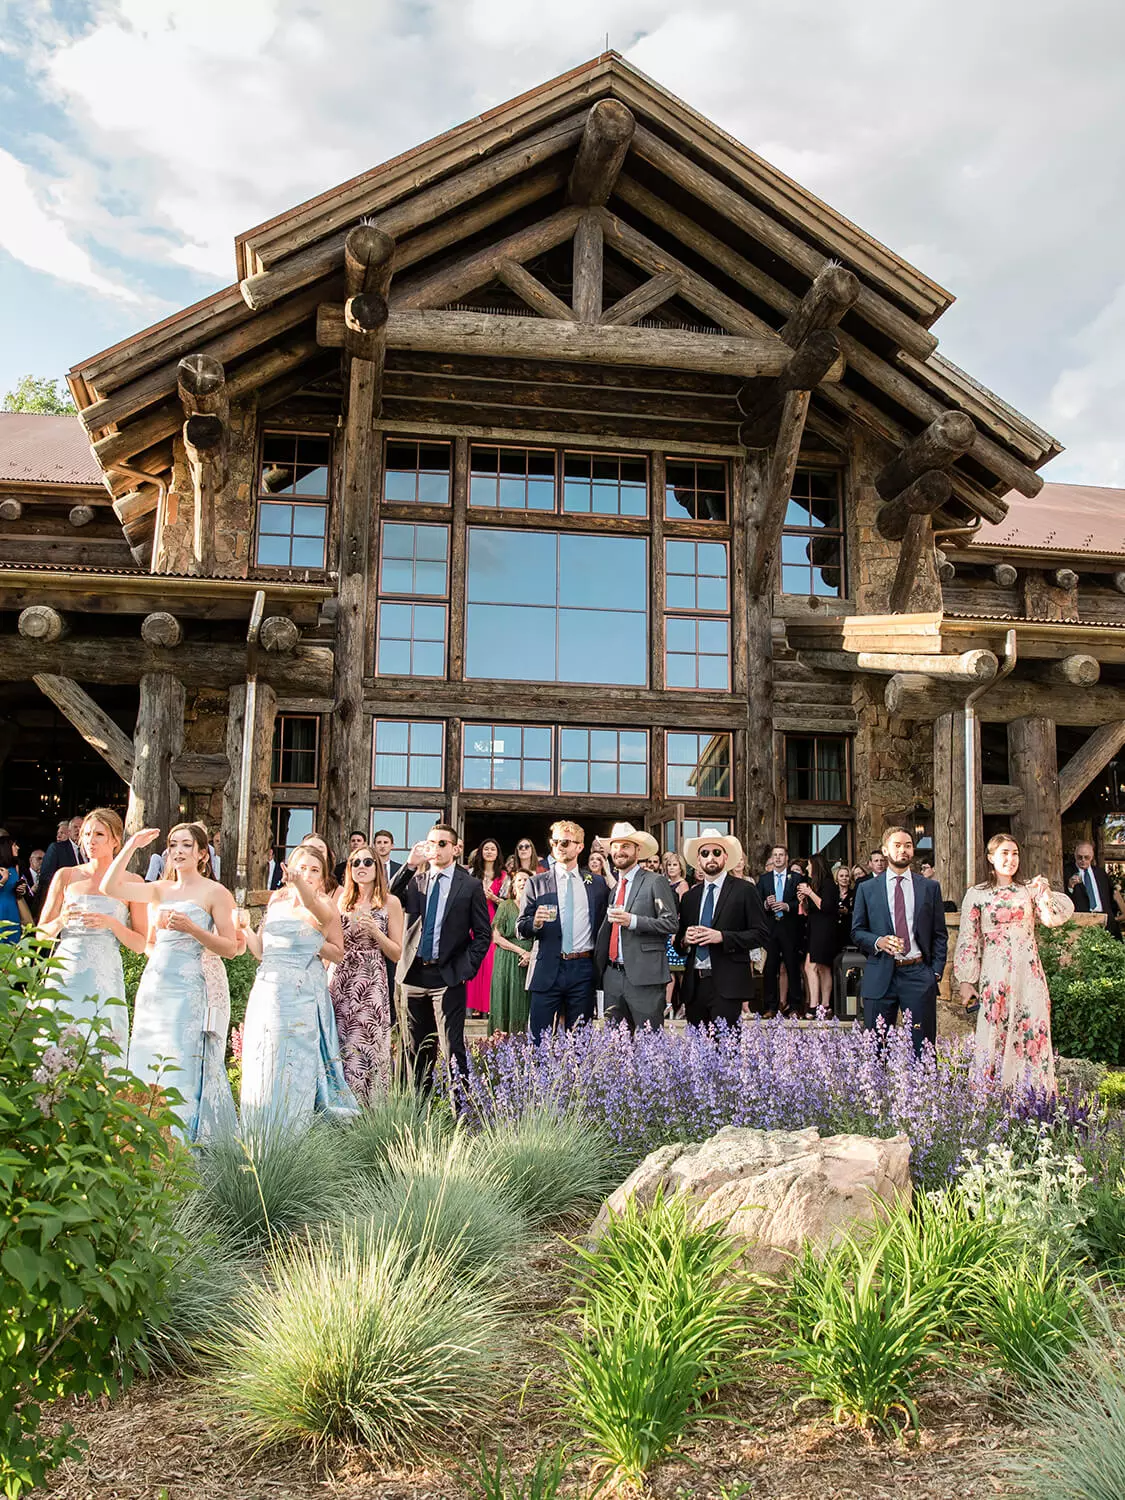 The Stylish Bride wedding party and venue, at Brush Creek Ranch wedding venue